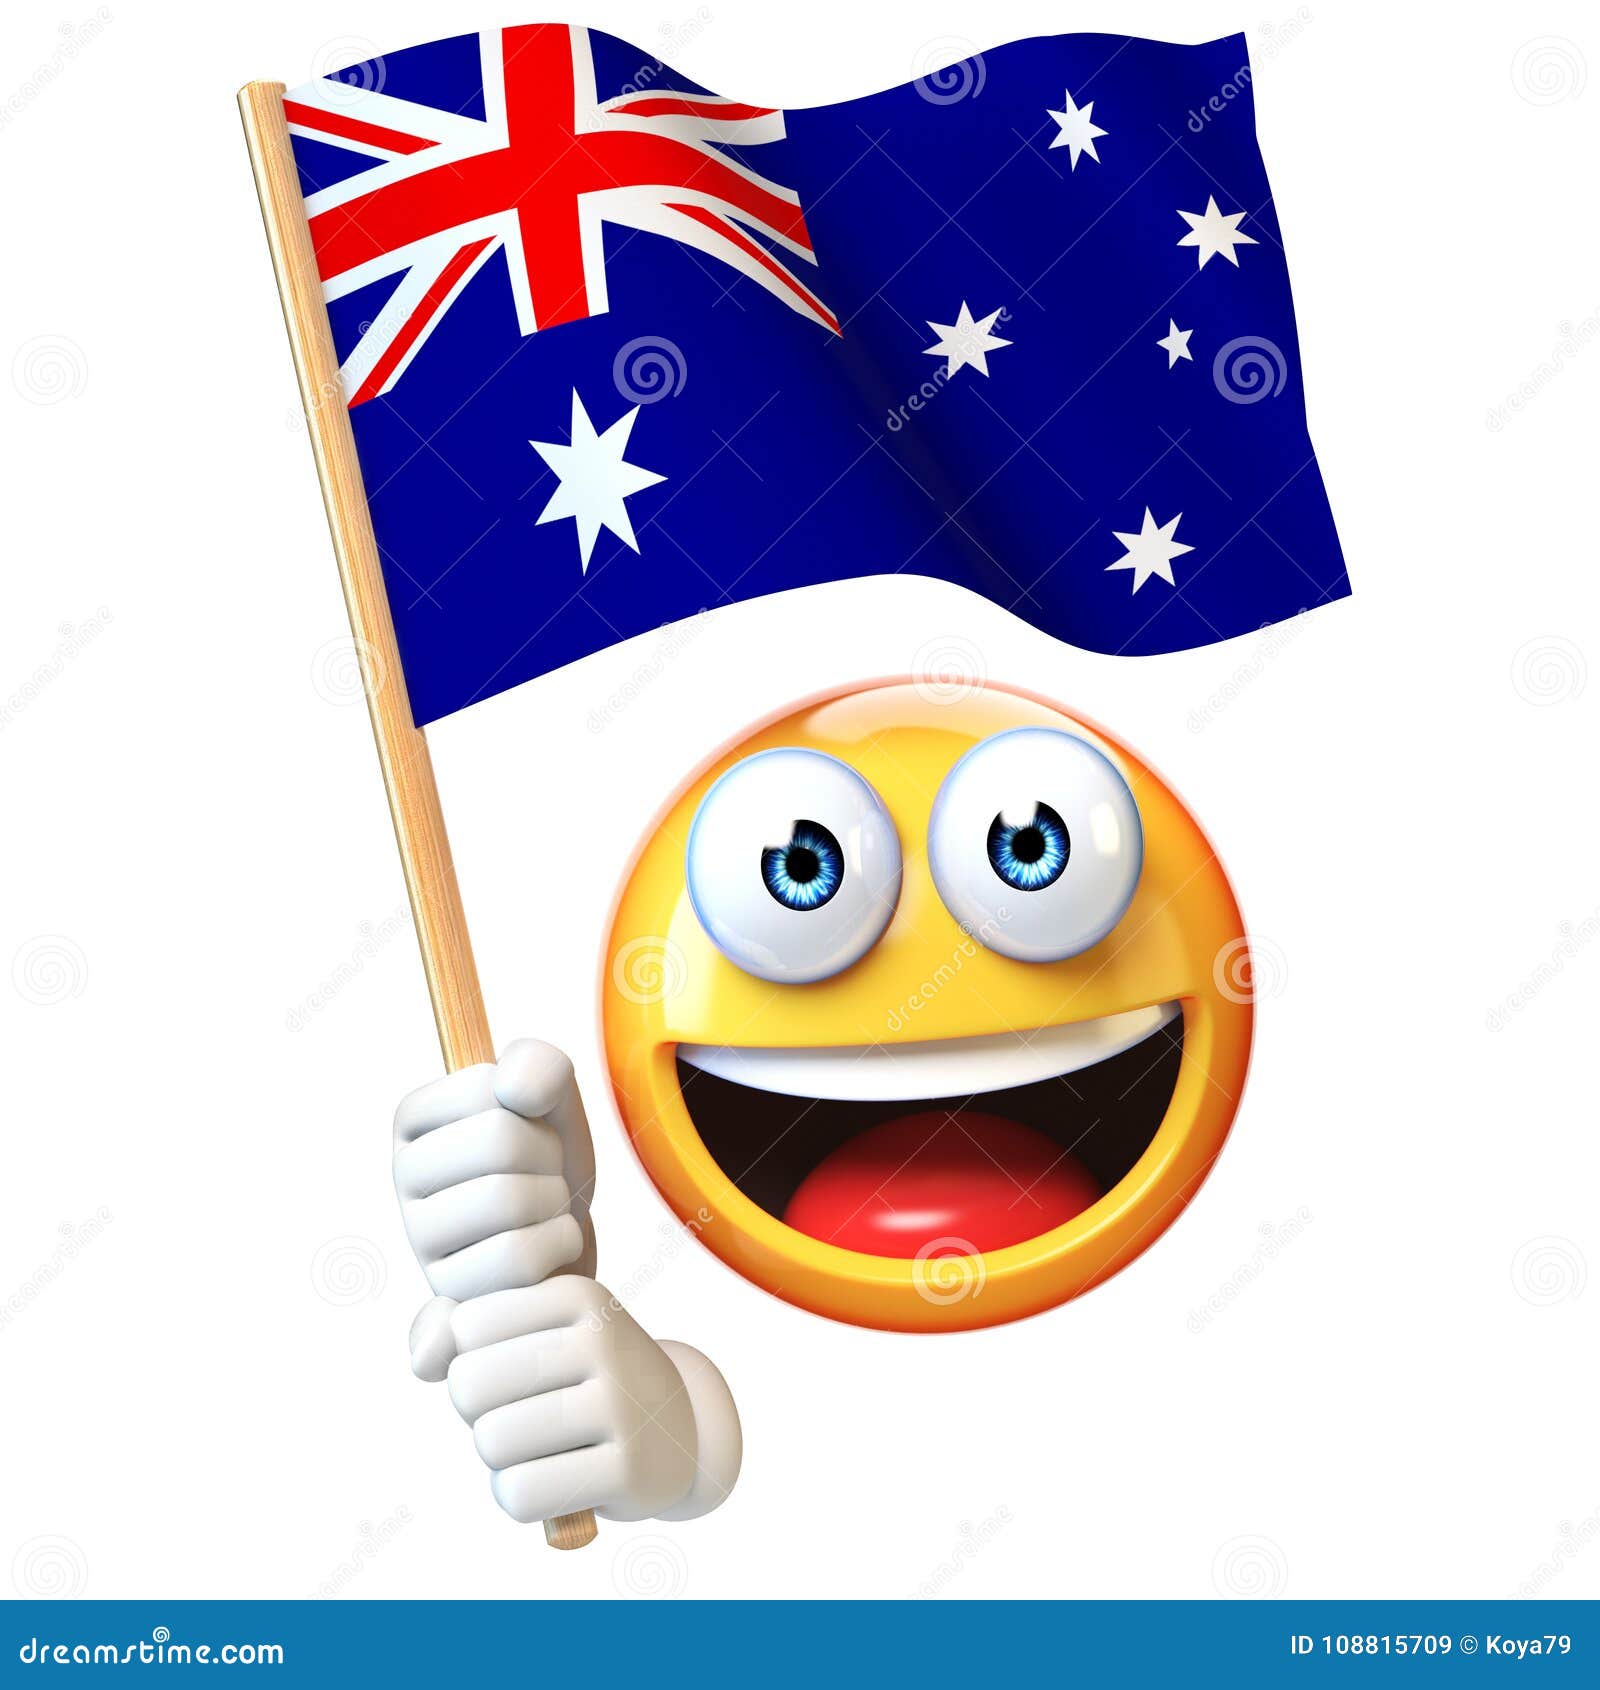 Emoji Holding Flag, Emoticon Waving National Flag of Australia Rendering Stock Illustration - Illustration of hand, mascot: 108815709